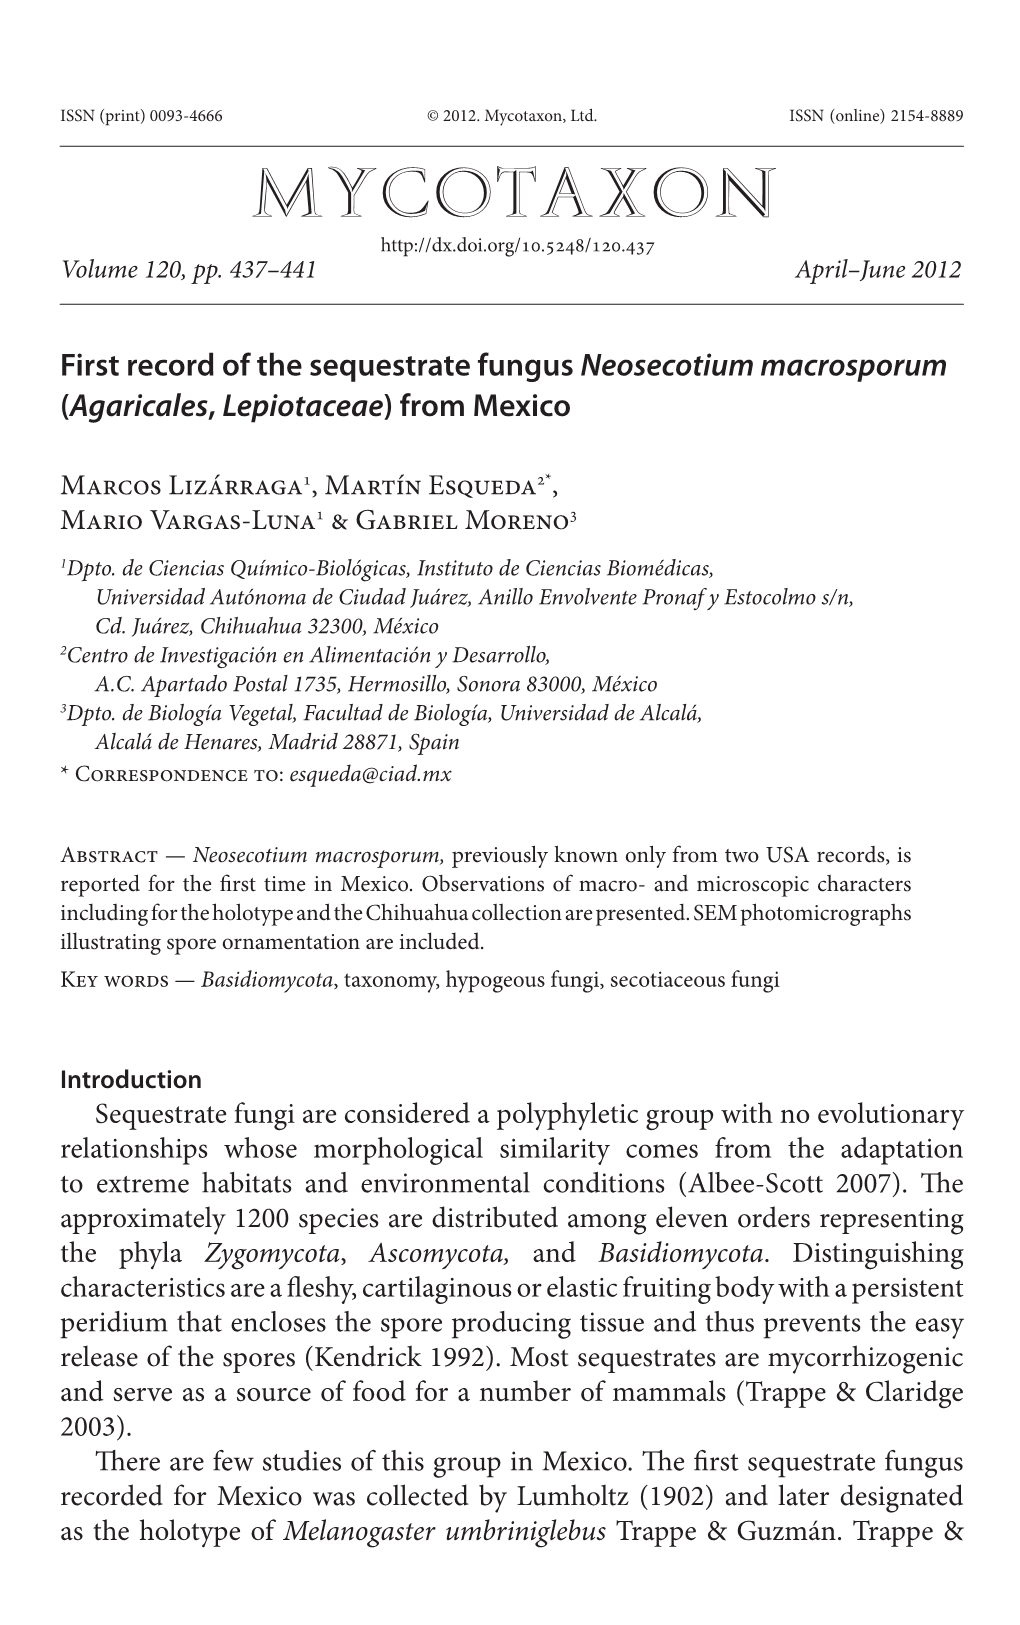 First Record of the Sequestrate Fungus &lt;I&gt;Neosecotium Macrosporum&lt;/I&gt; (&lt;I&gt;Agaricales&lt;/I&gt;, &lt;I&gt;Lepio